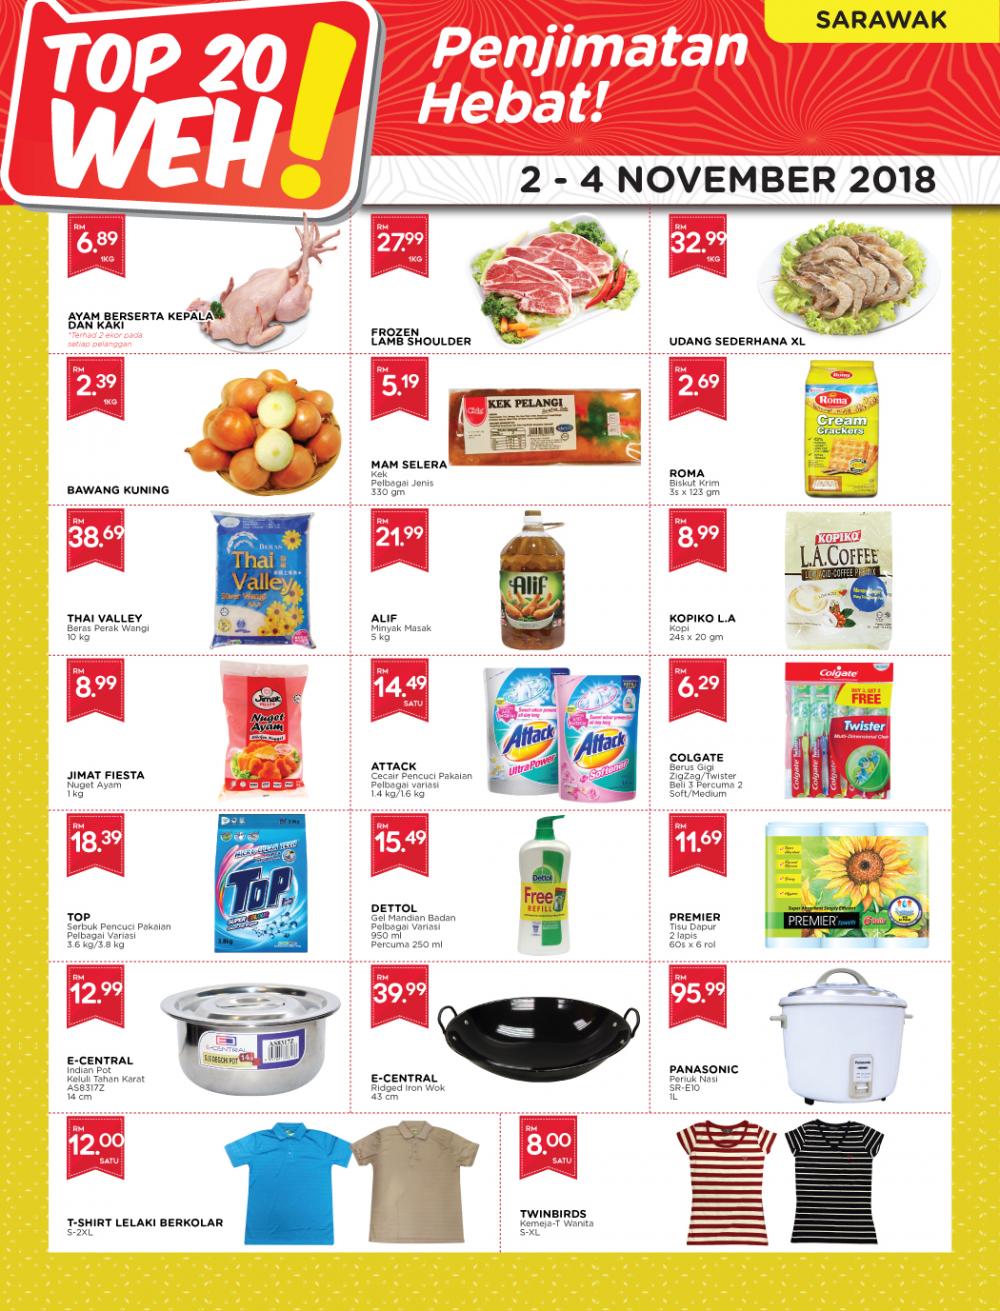 MYDIN TOP 20 WEH Promotion at Sarawak (2 November 2018 - 4 November 2018)